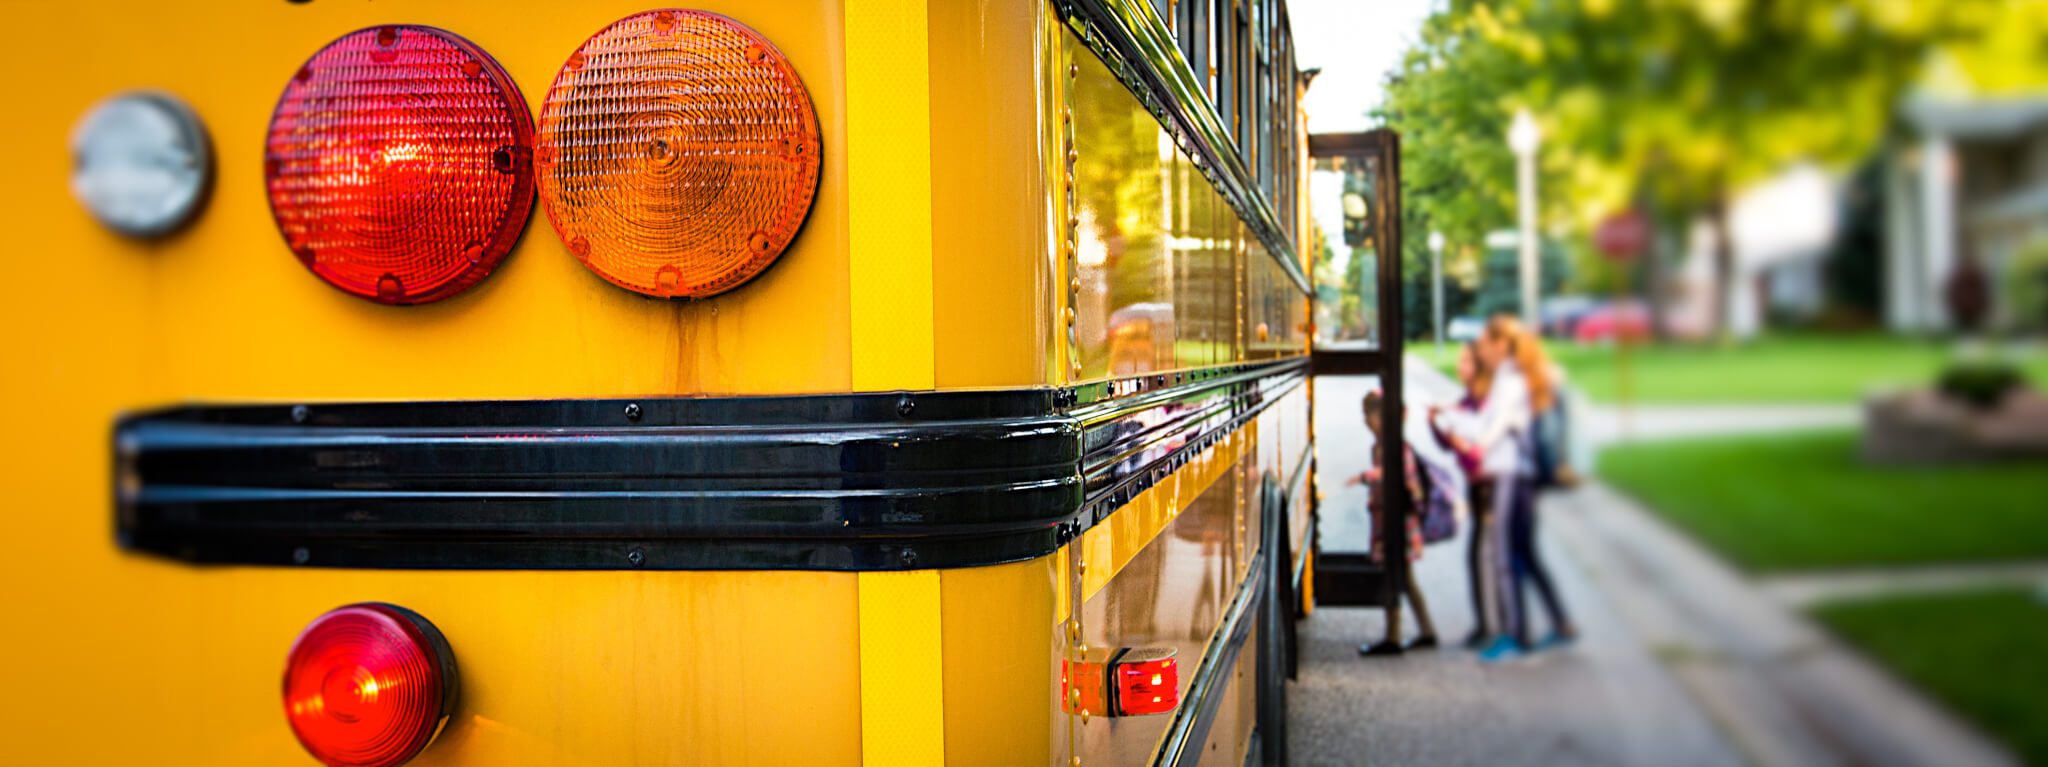 Be Prepared Back-to-School Countdown bus